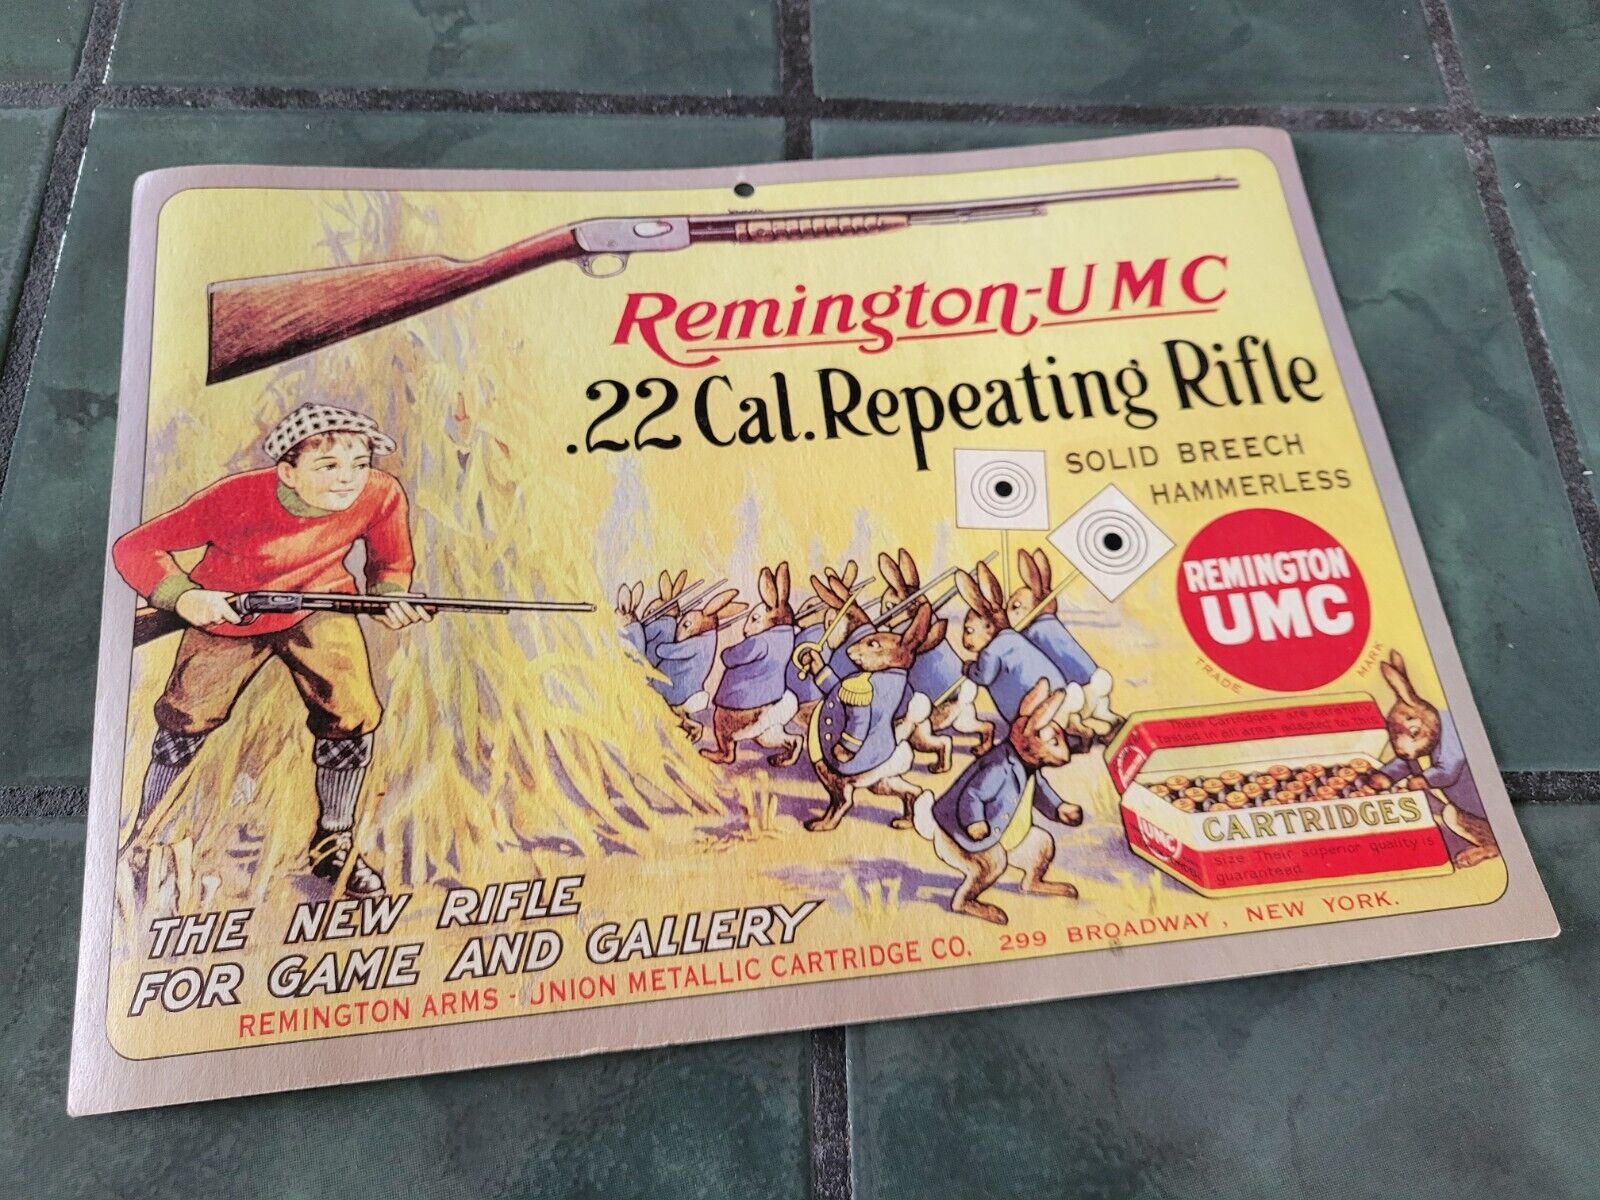 Vintage REMINGTON .22 RIFLE UMC gallery hammerless target rabbit hunting sign